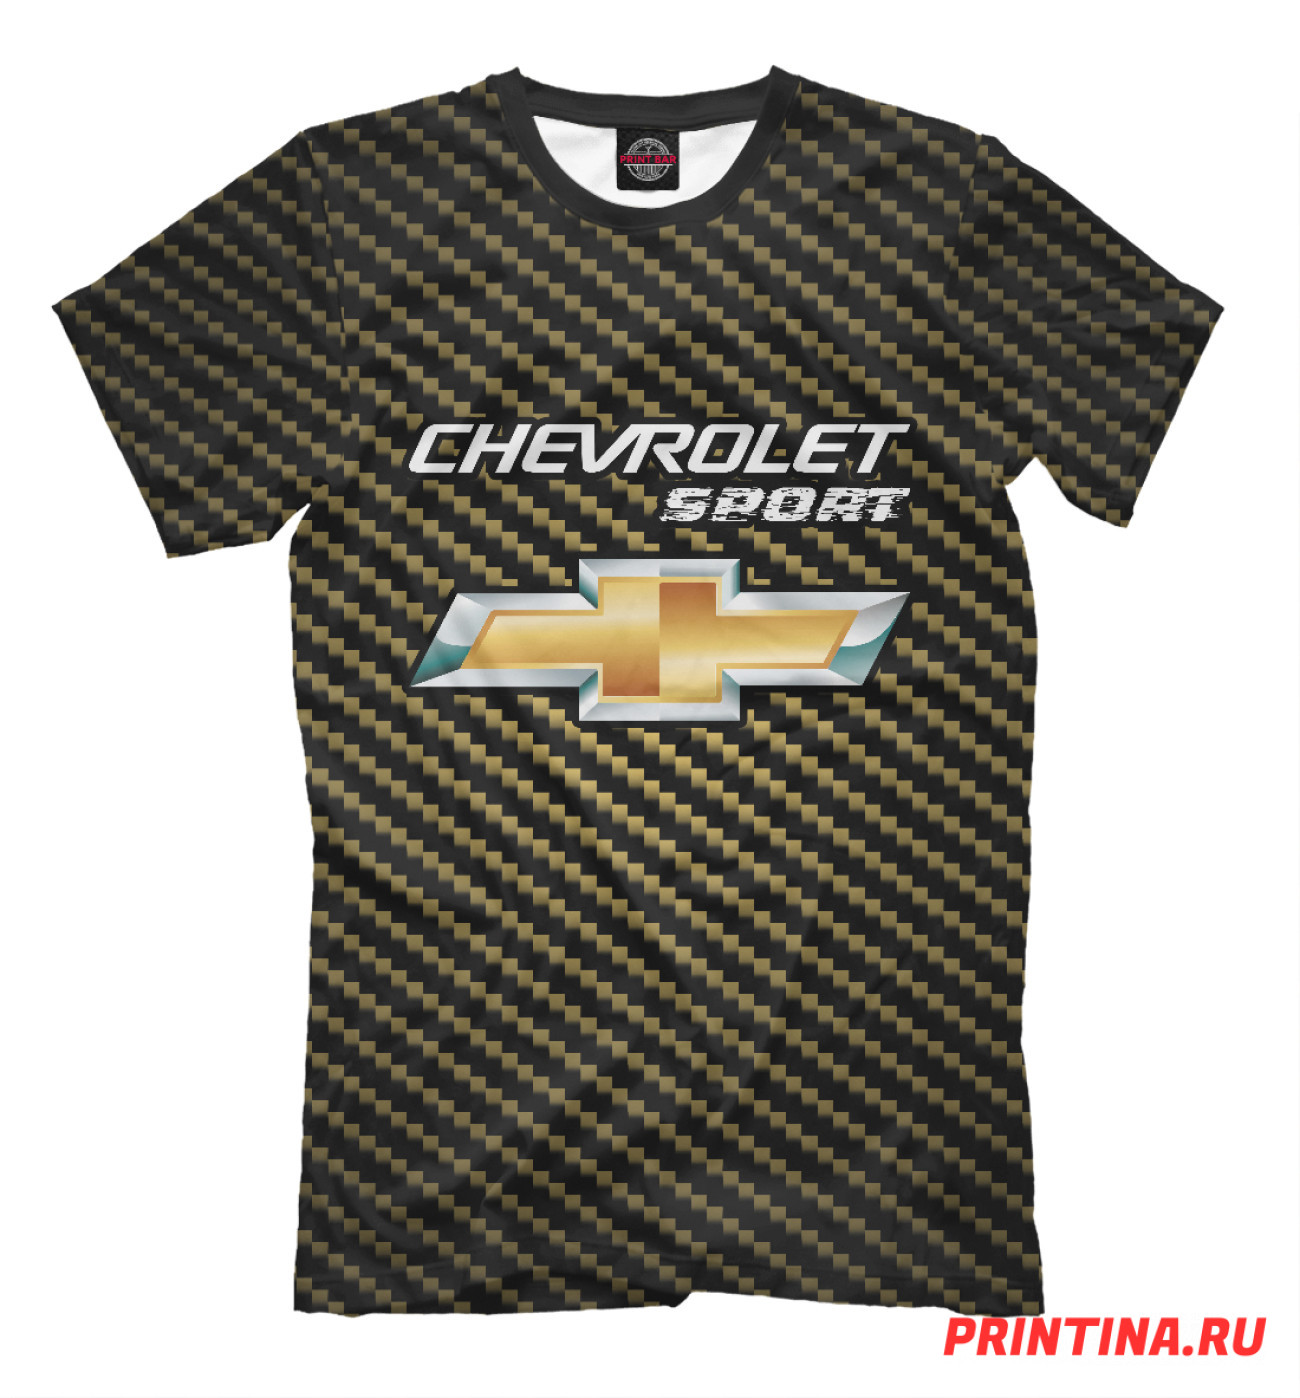 Мужская Футболка Chevrolet | Sport, артикул: CVR-391584-fut-2